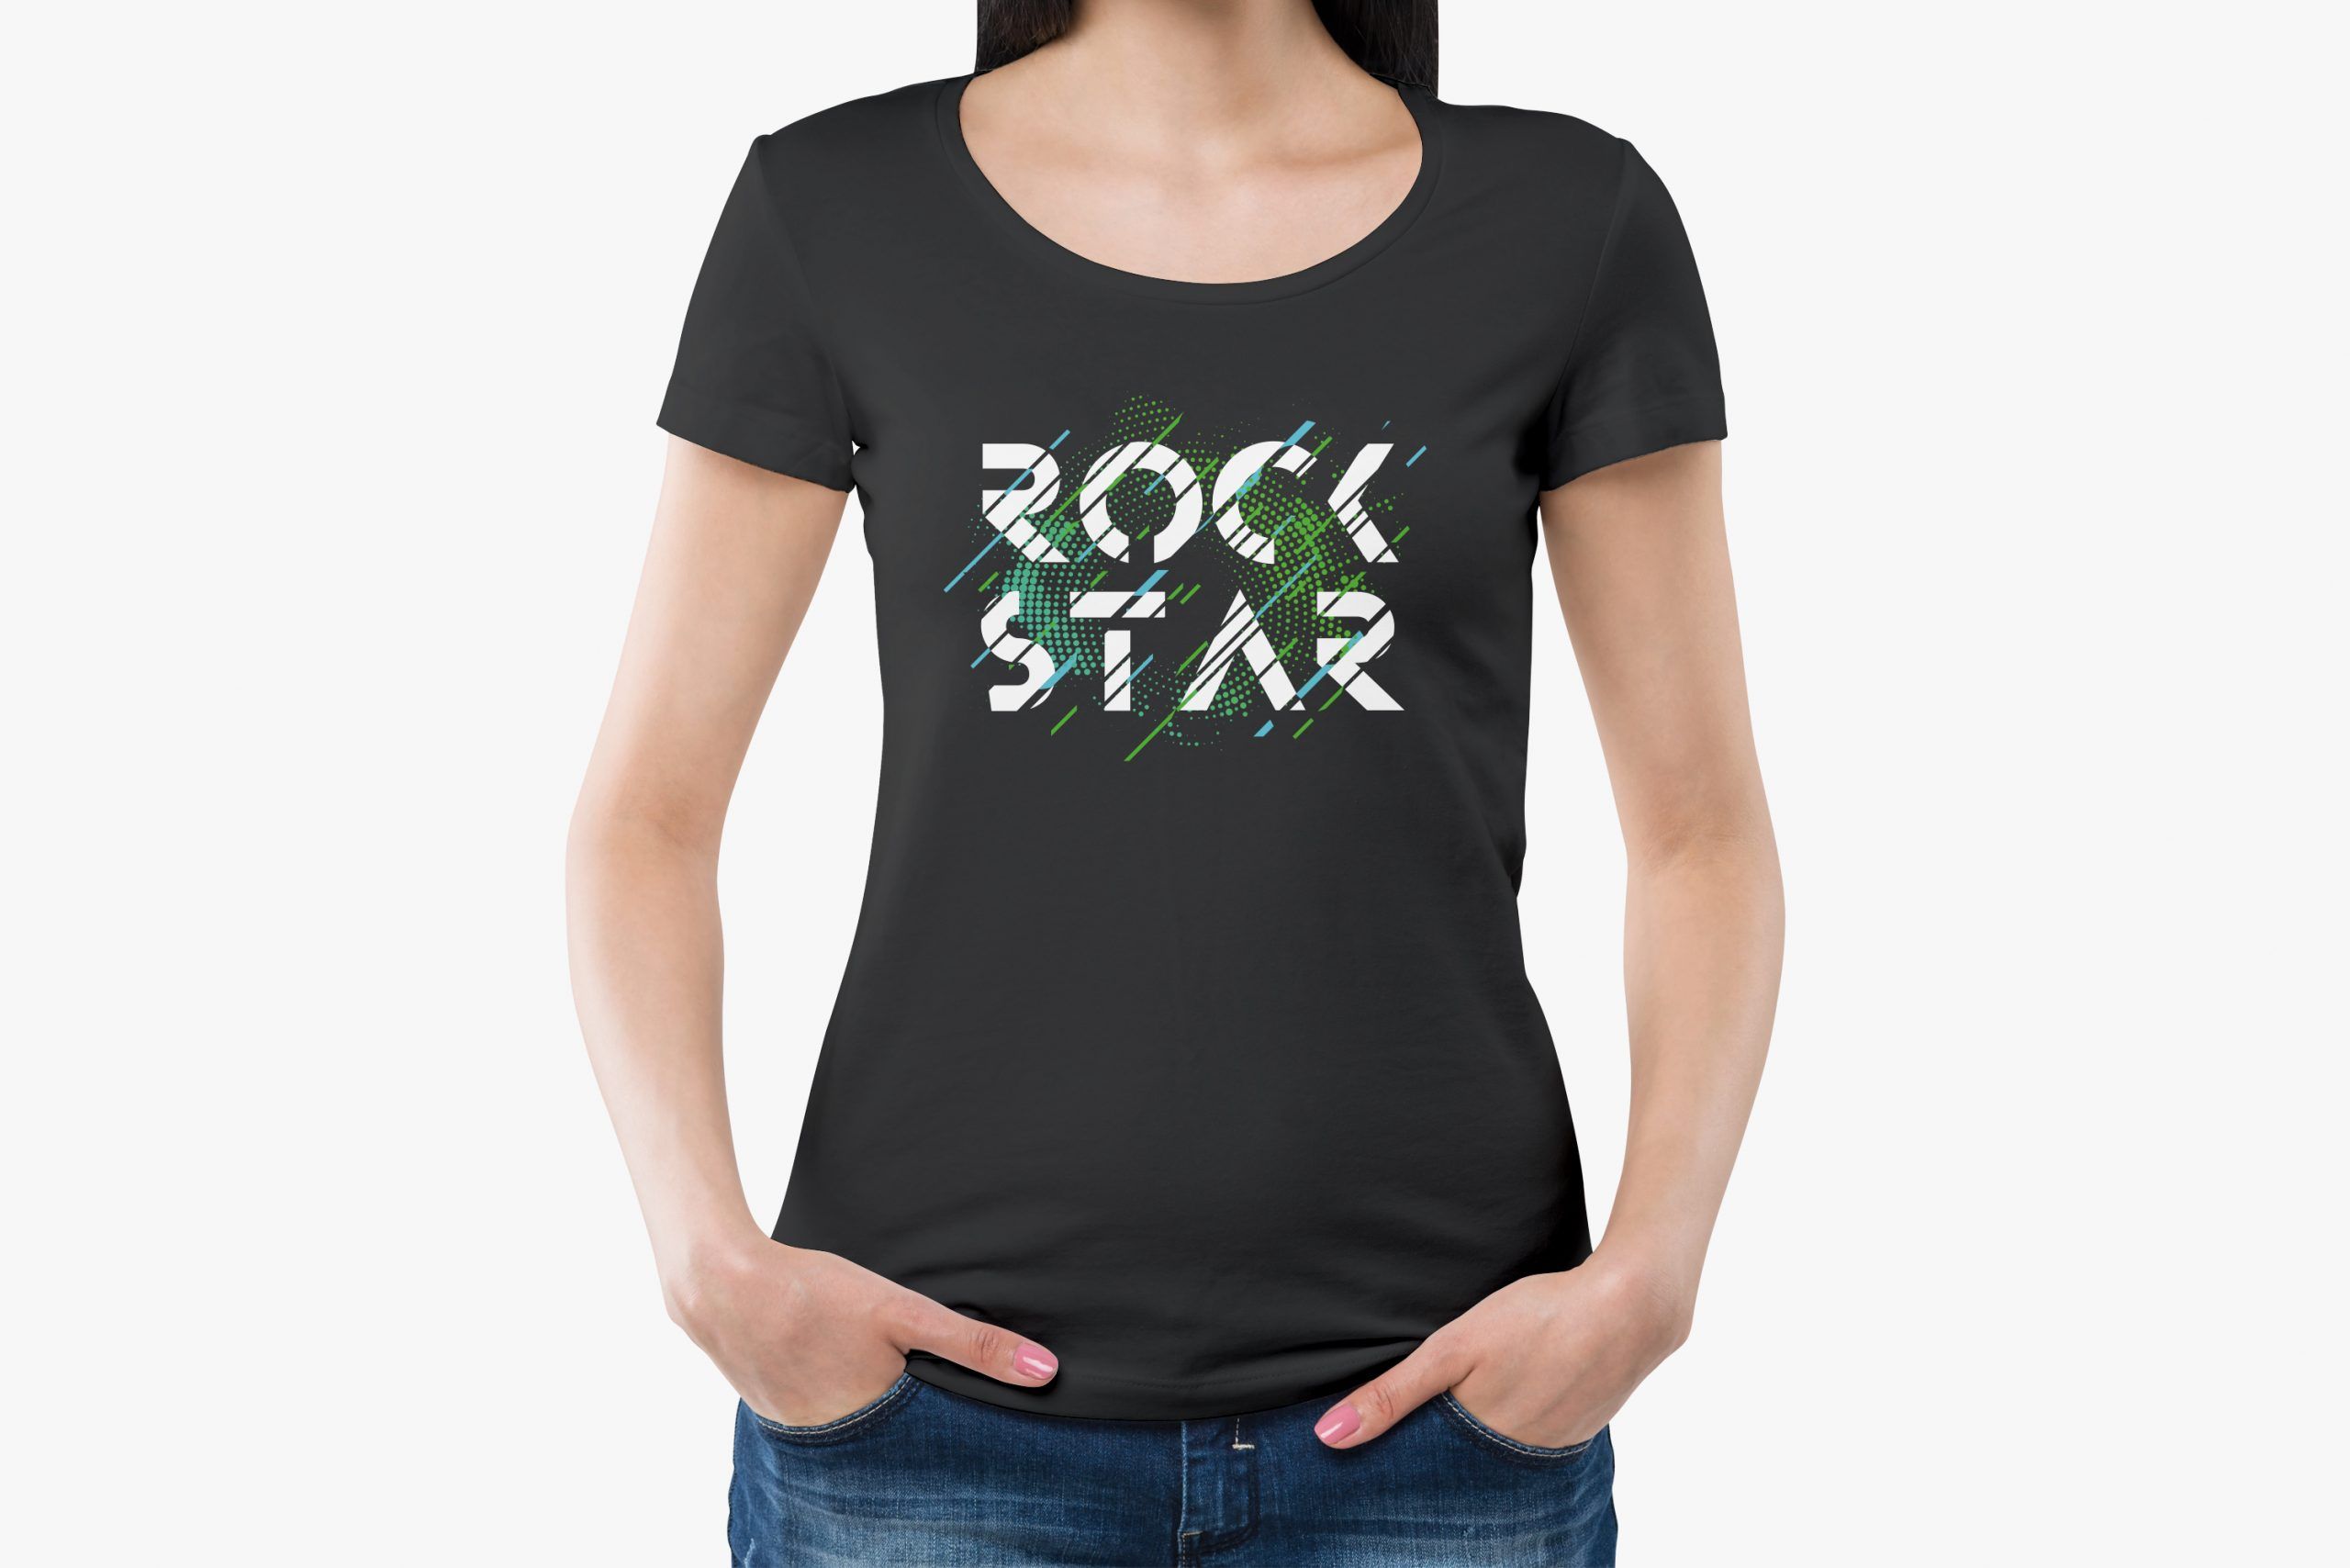 Rock Star Stampa2 Camisetas personalizadas